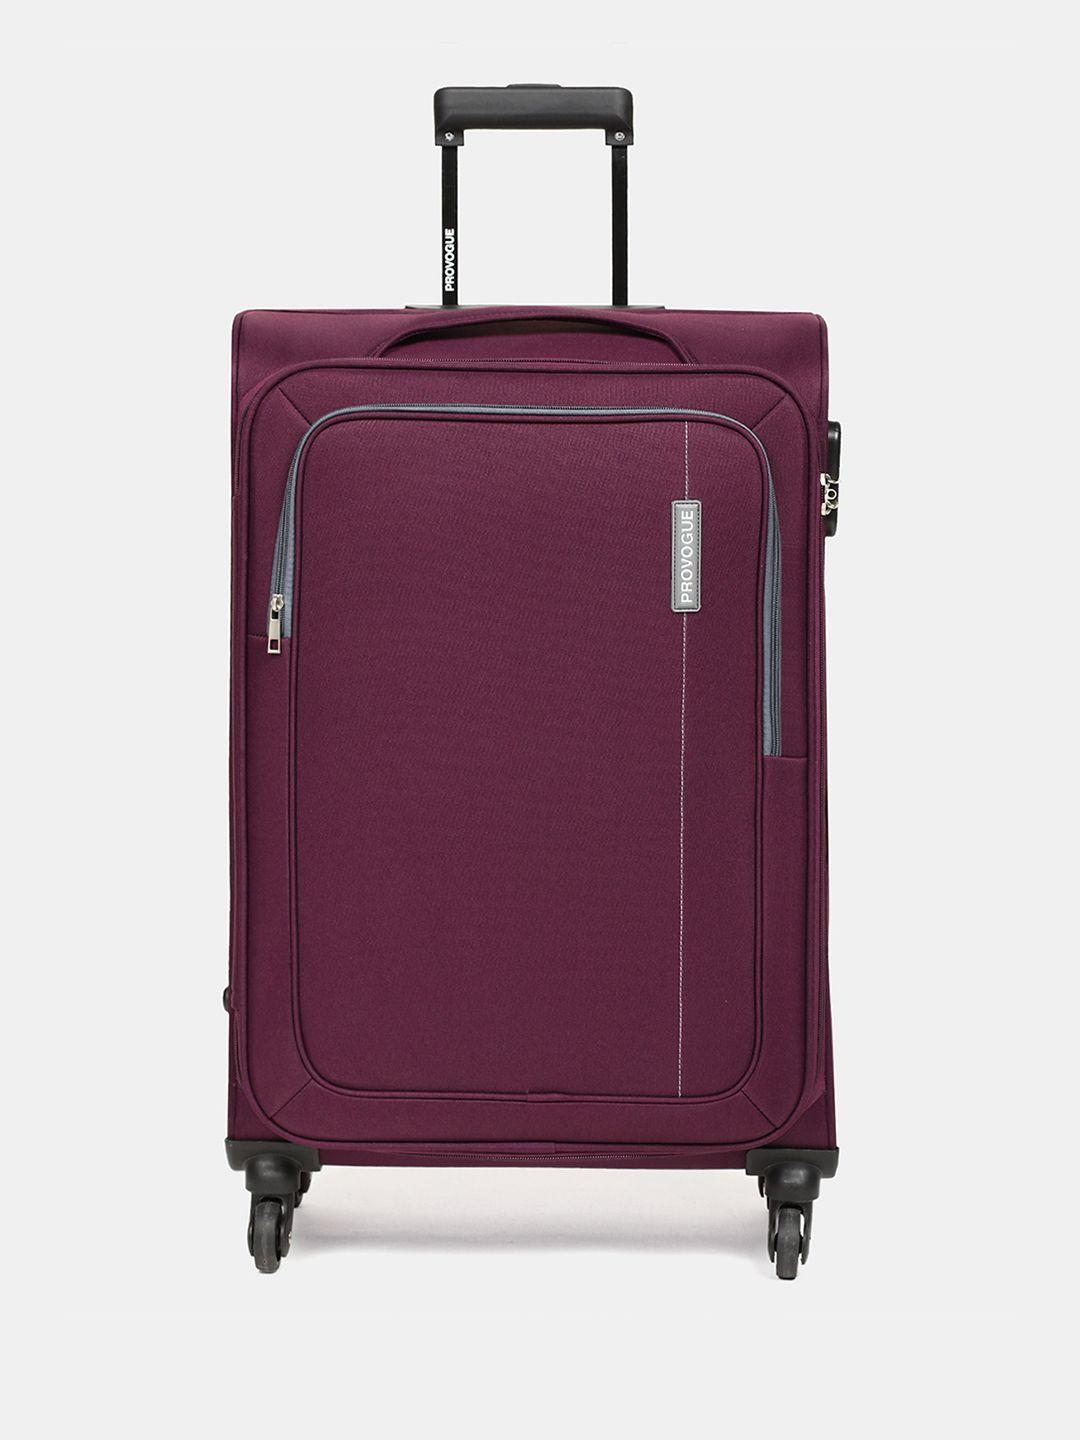 provogue lead medium soft trolley suitcase - 65 cm